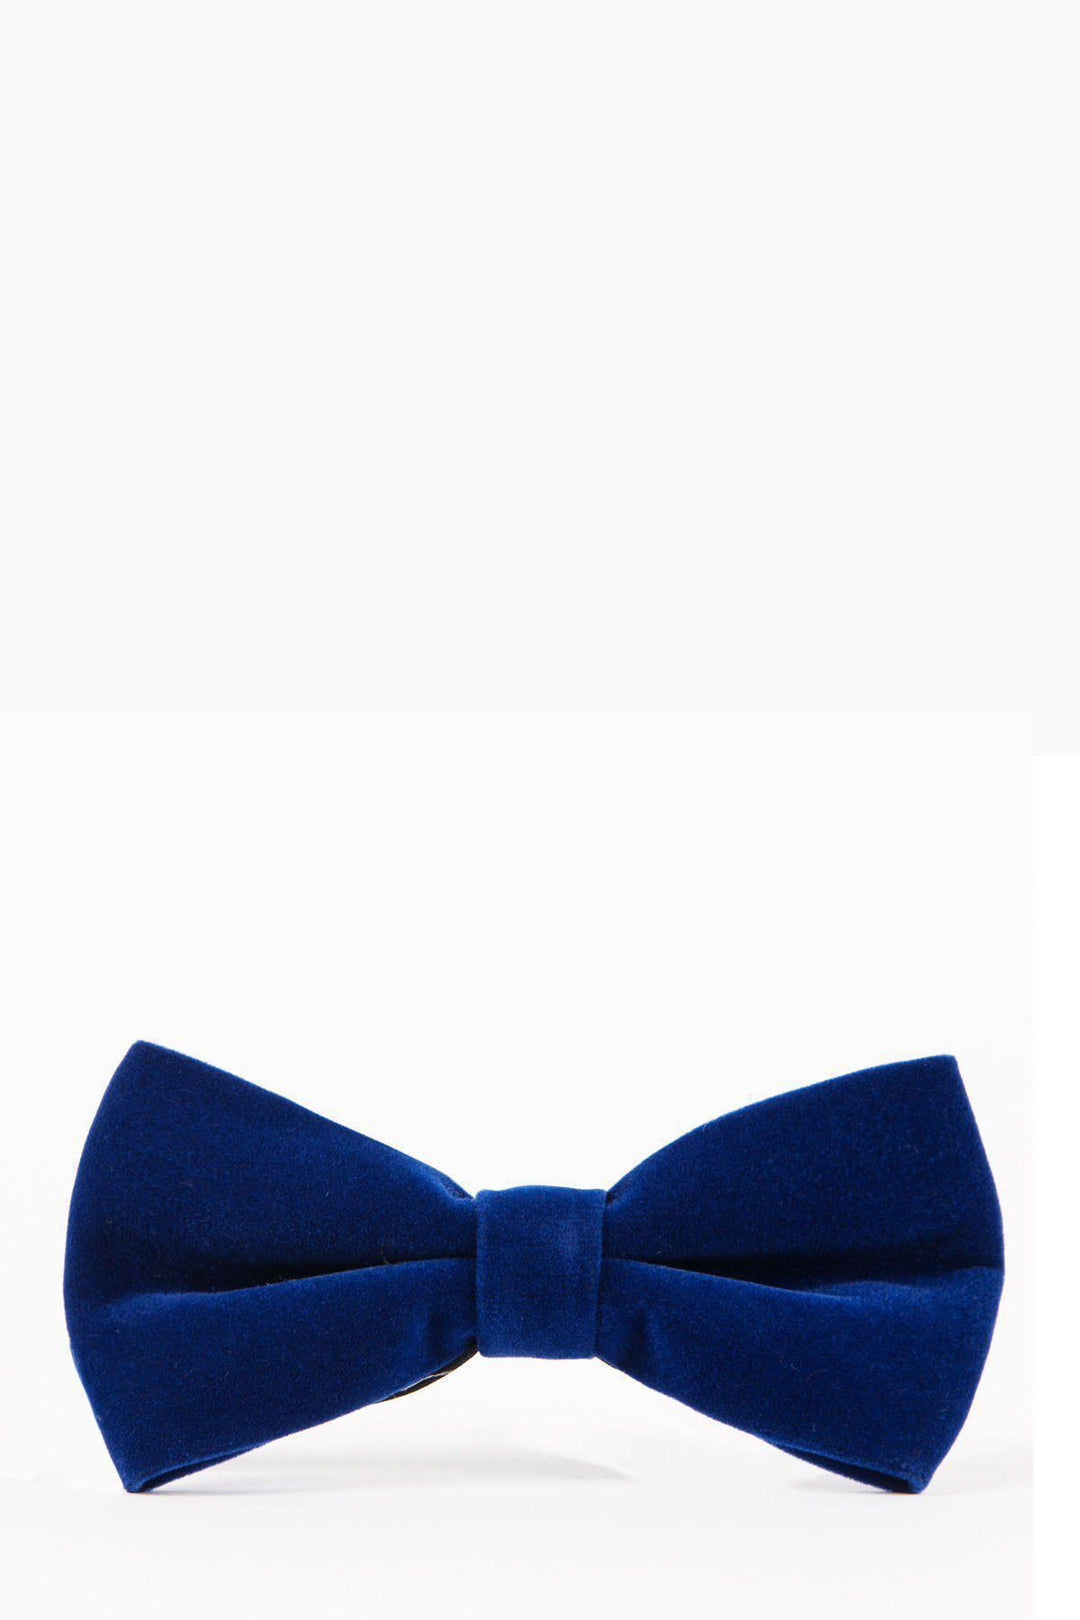 VELVET - Electric Blue Velvet Bow Tie-Accessory-Accessory Menswear